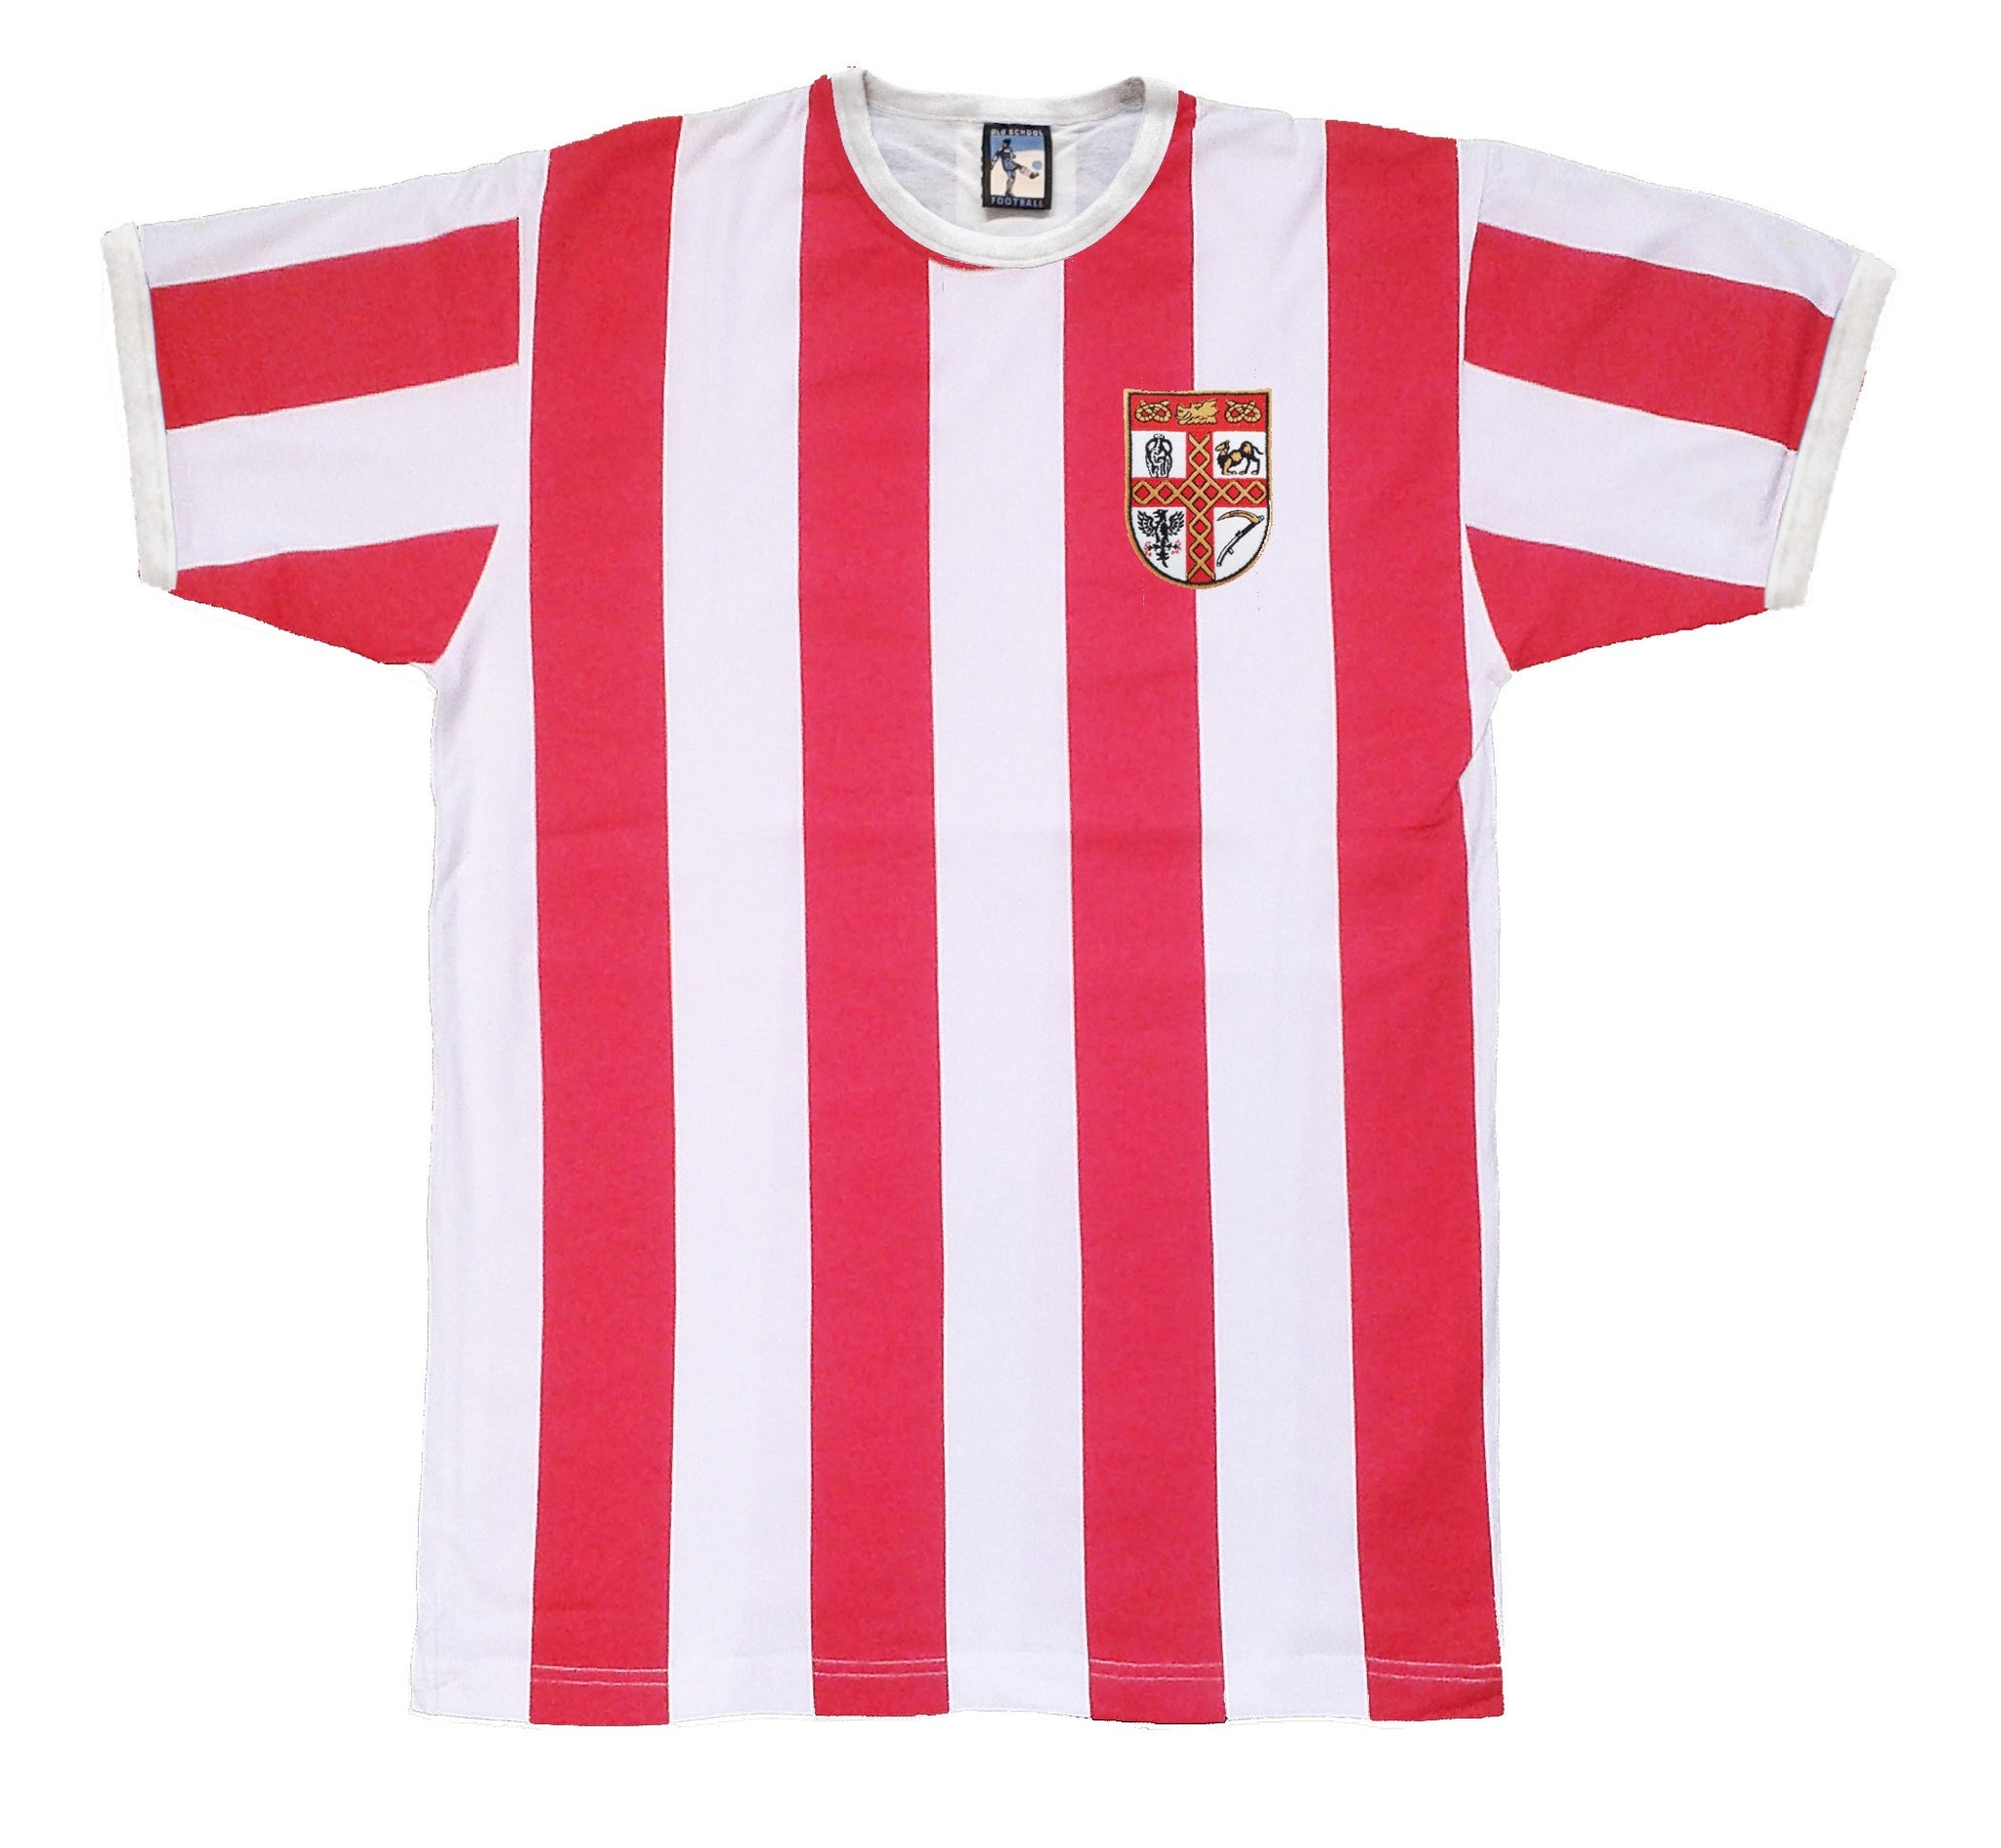 Stoke City Retro Football T Shirt 1950s - Old School Football